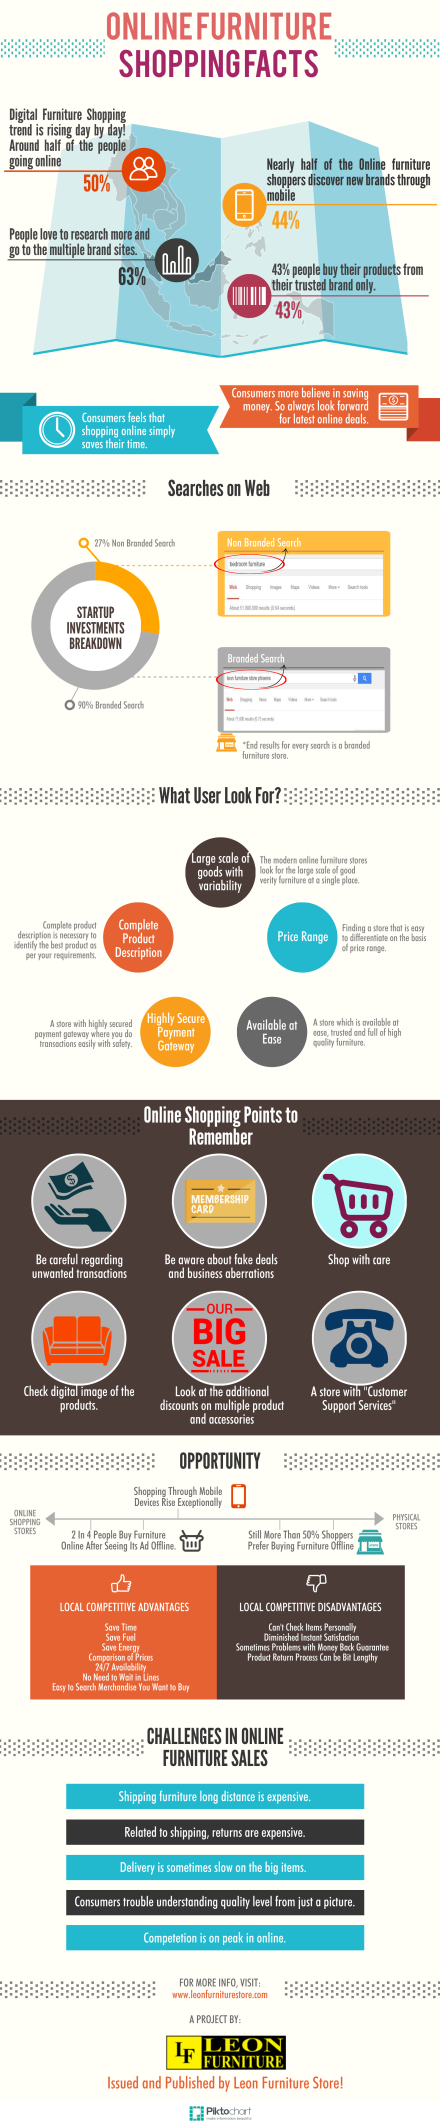 Online Furniture Shopping Fact